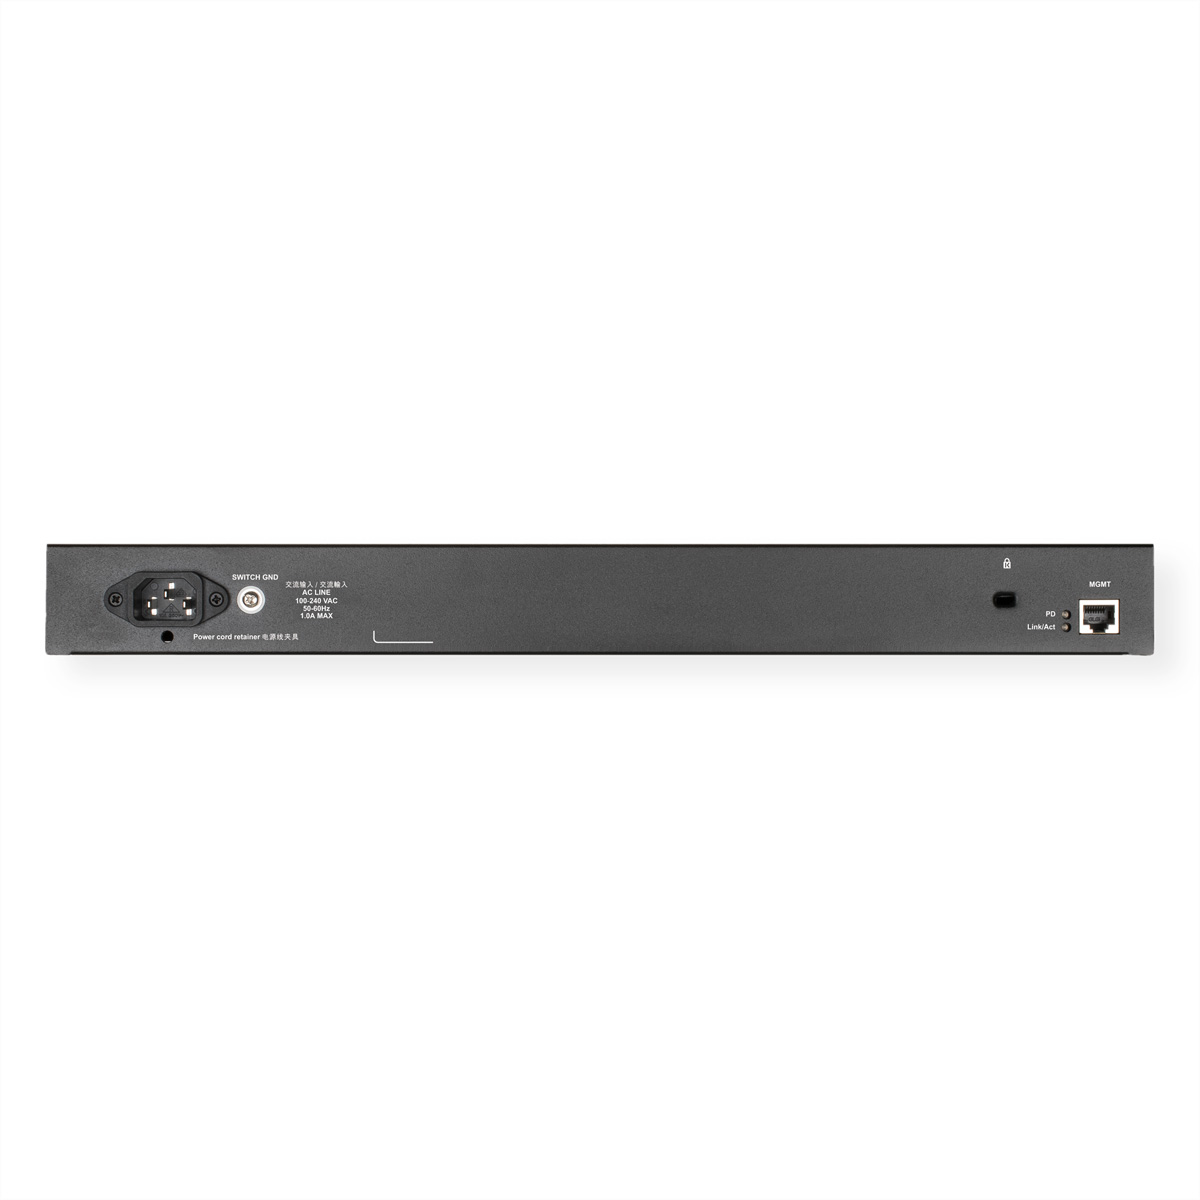 D-LINK DGS-1520-52/E 52-Port Smart Managed Ethernet Switch Gigabit Stack Switch 10G 4x Gigabit